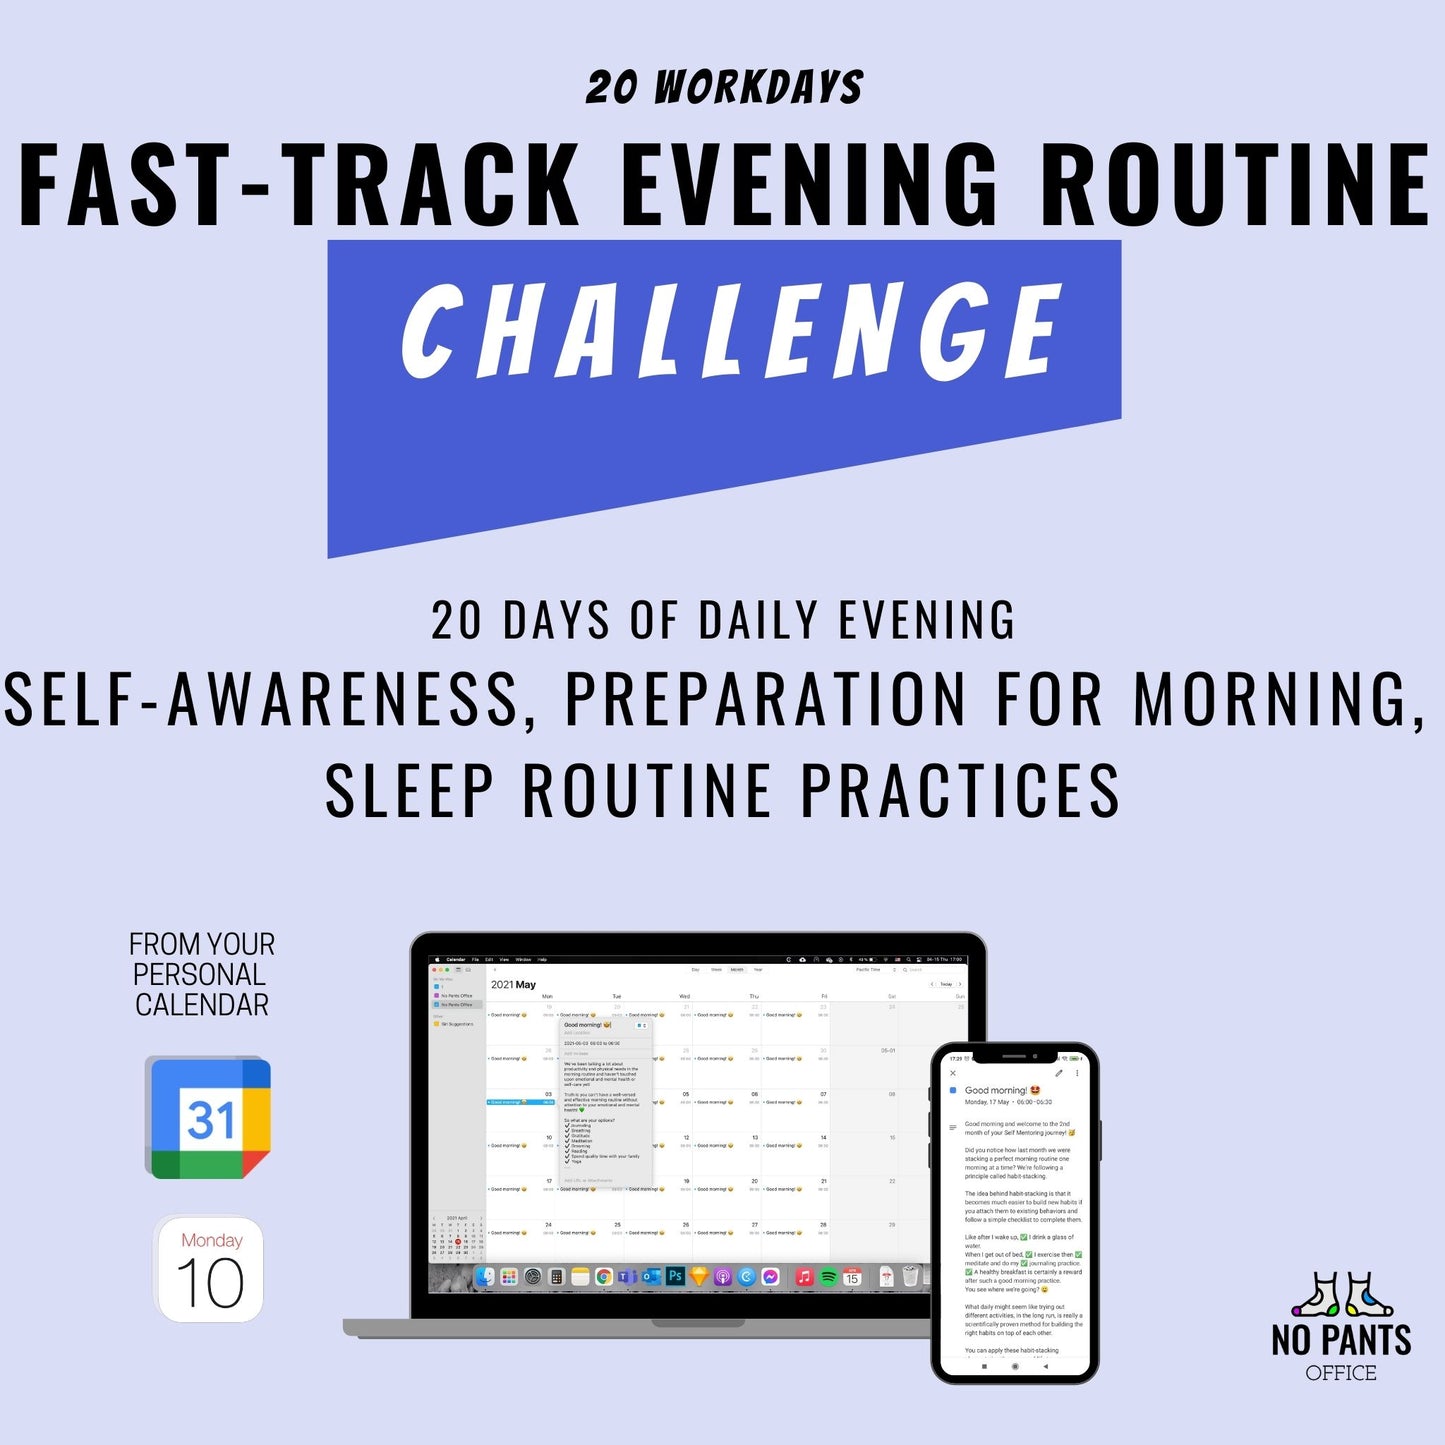 Fast-Track Evening Routine Challenge